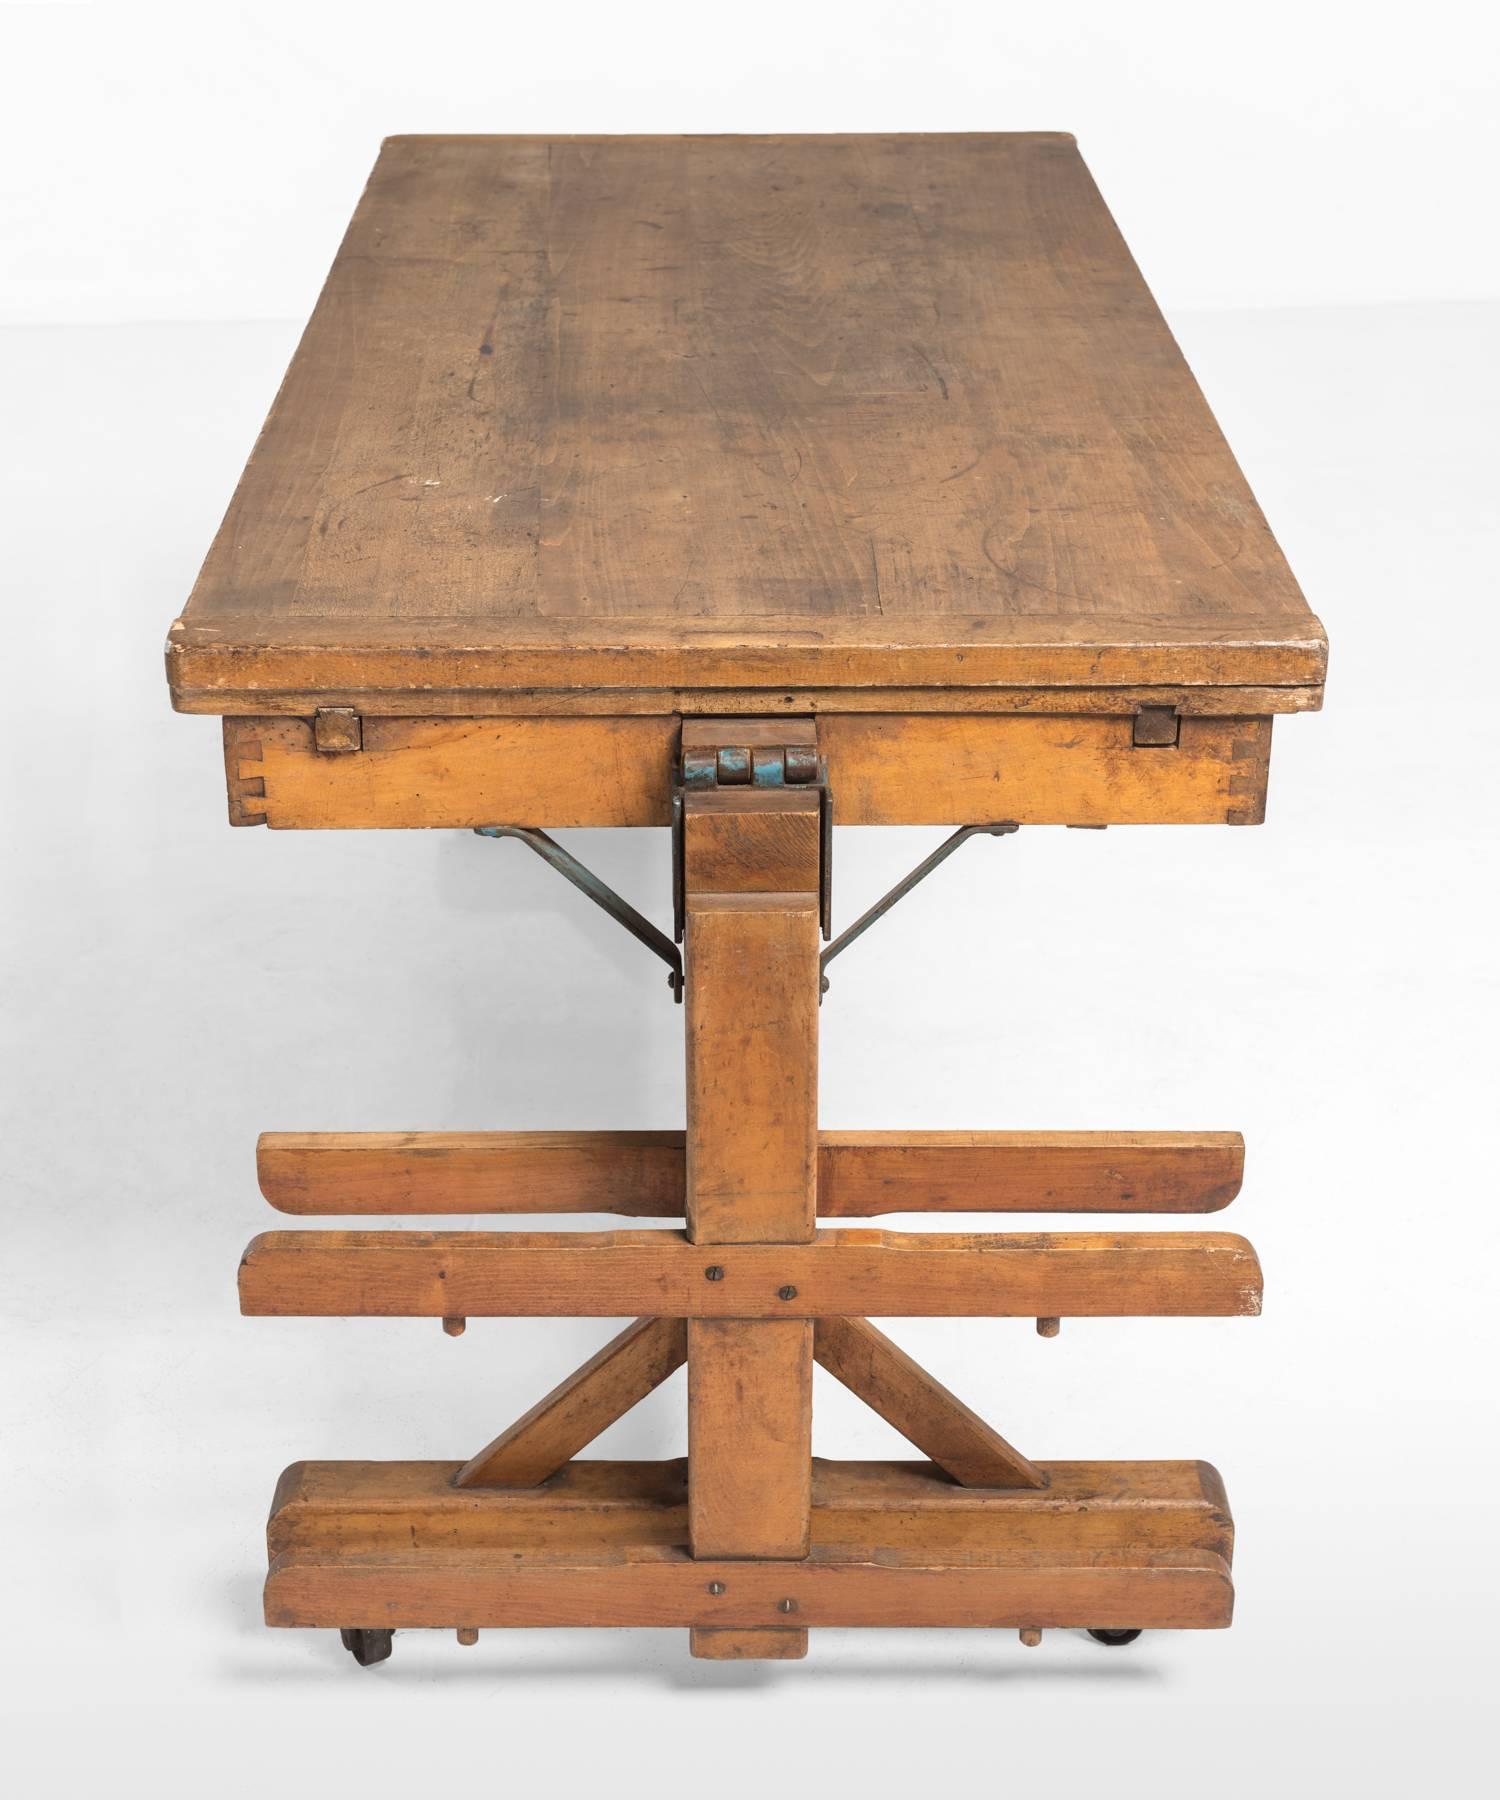 Industrial Metamorphic Bakers Table, circa 1900